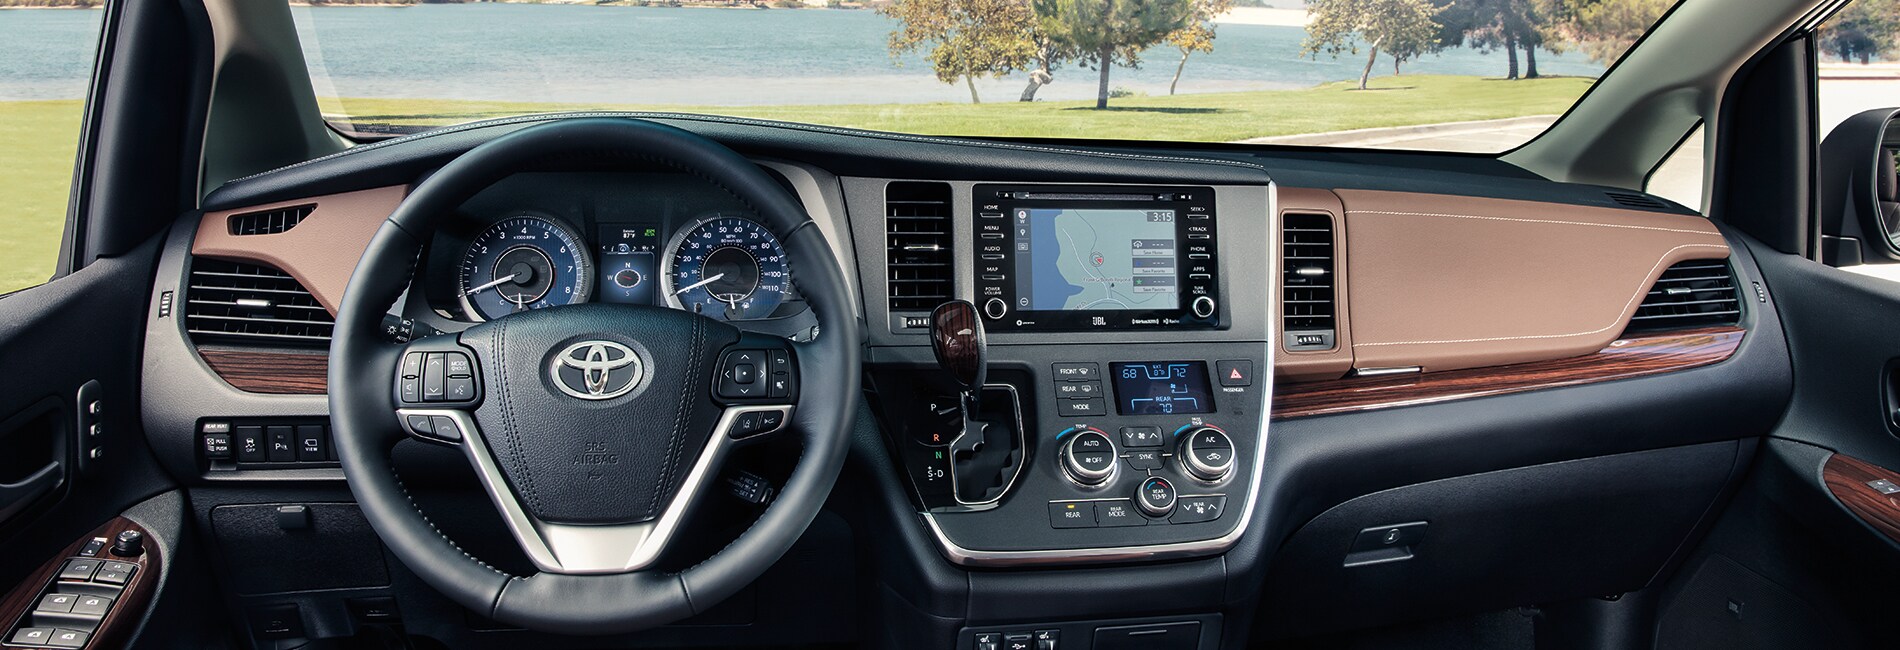 Toyota Sienna Interior Vehicle Features